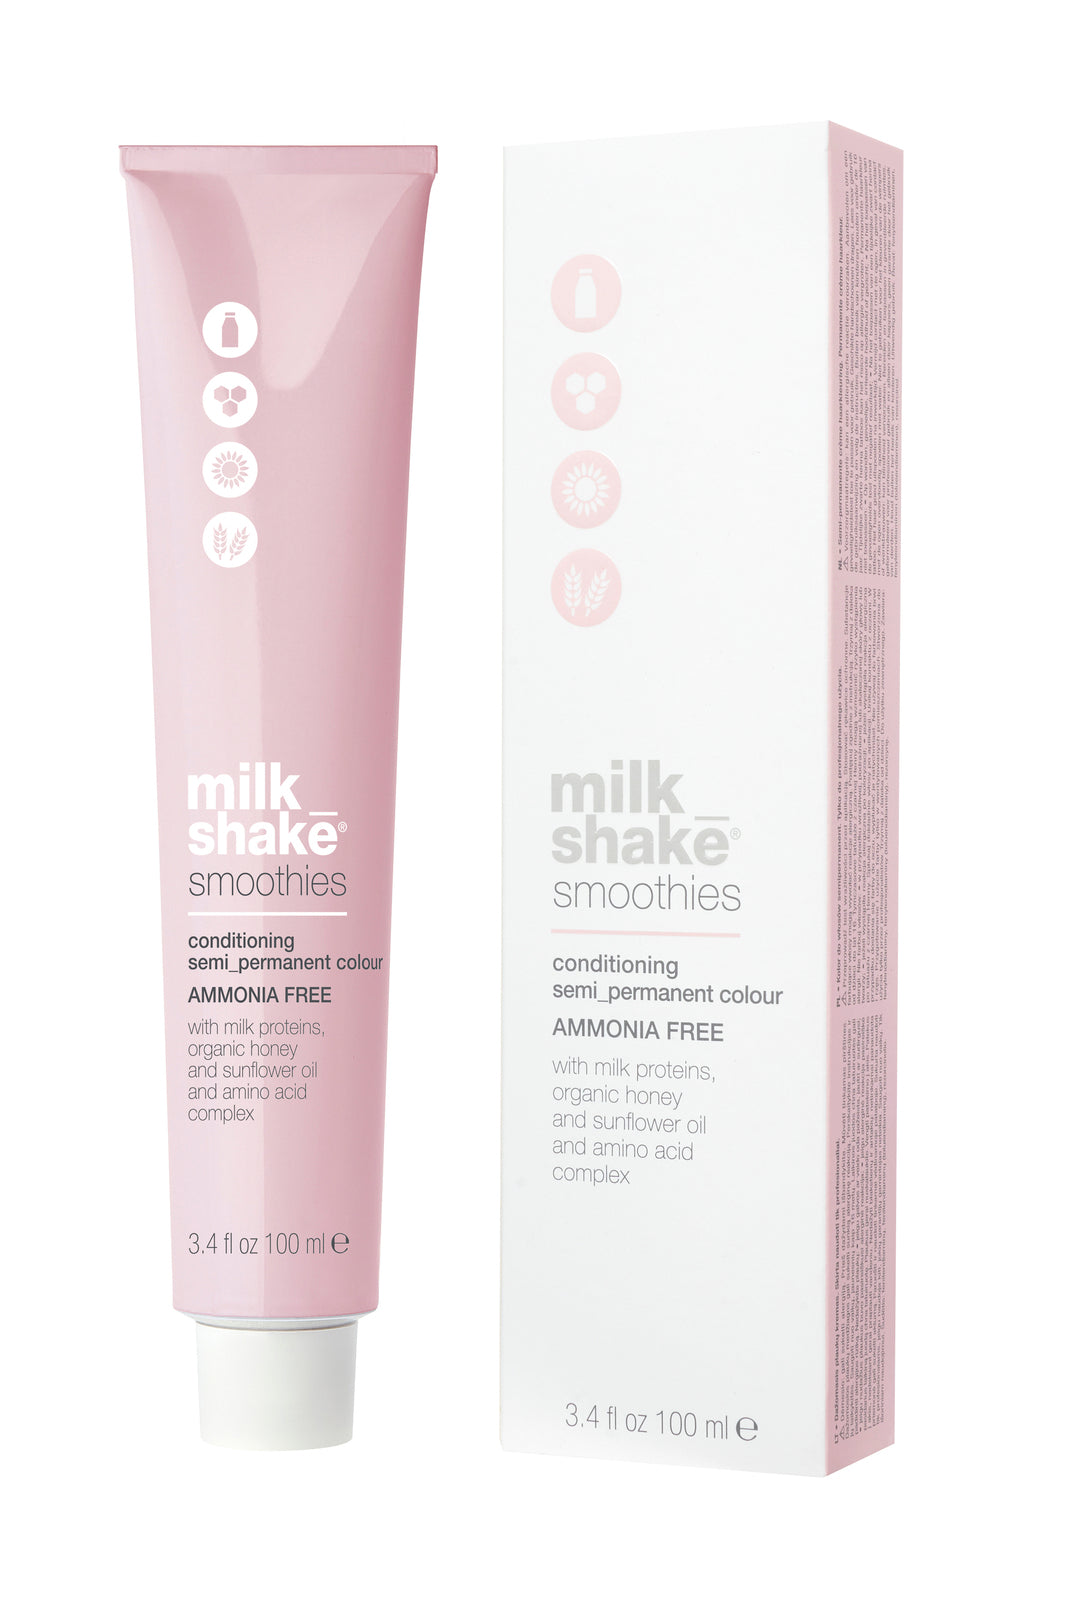 Milkshake smoothies semi-permanent color 10.11